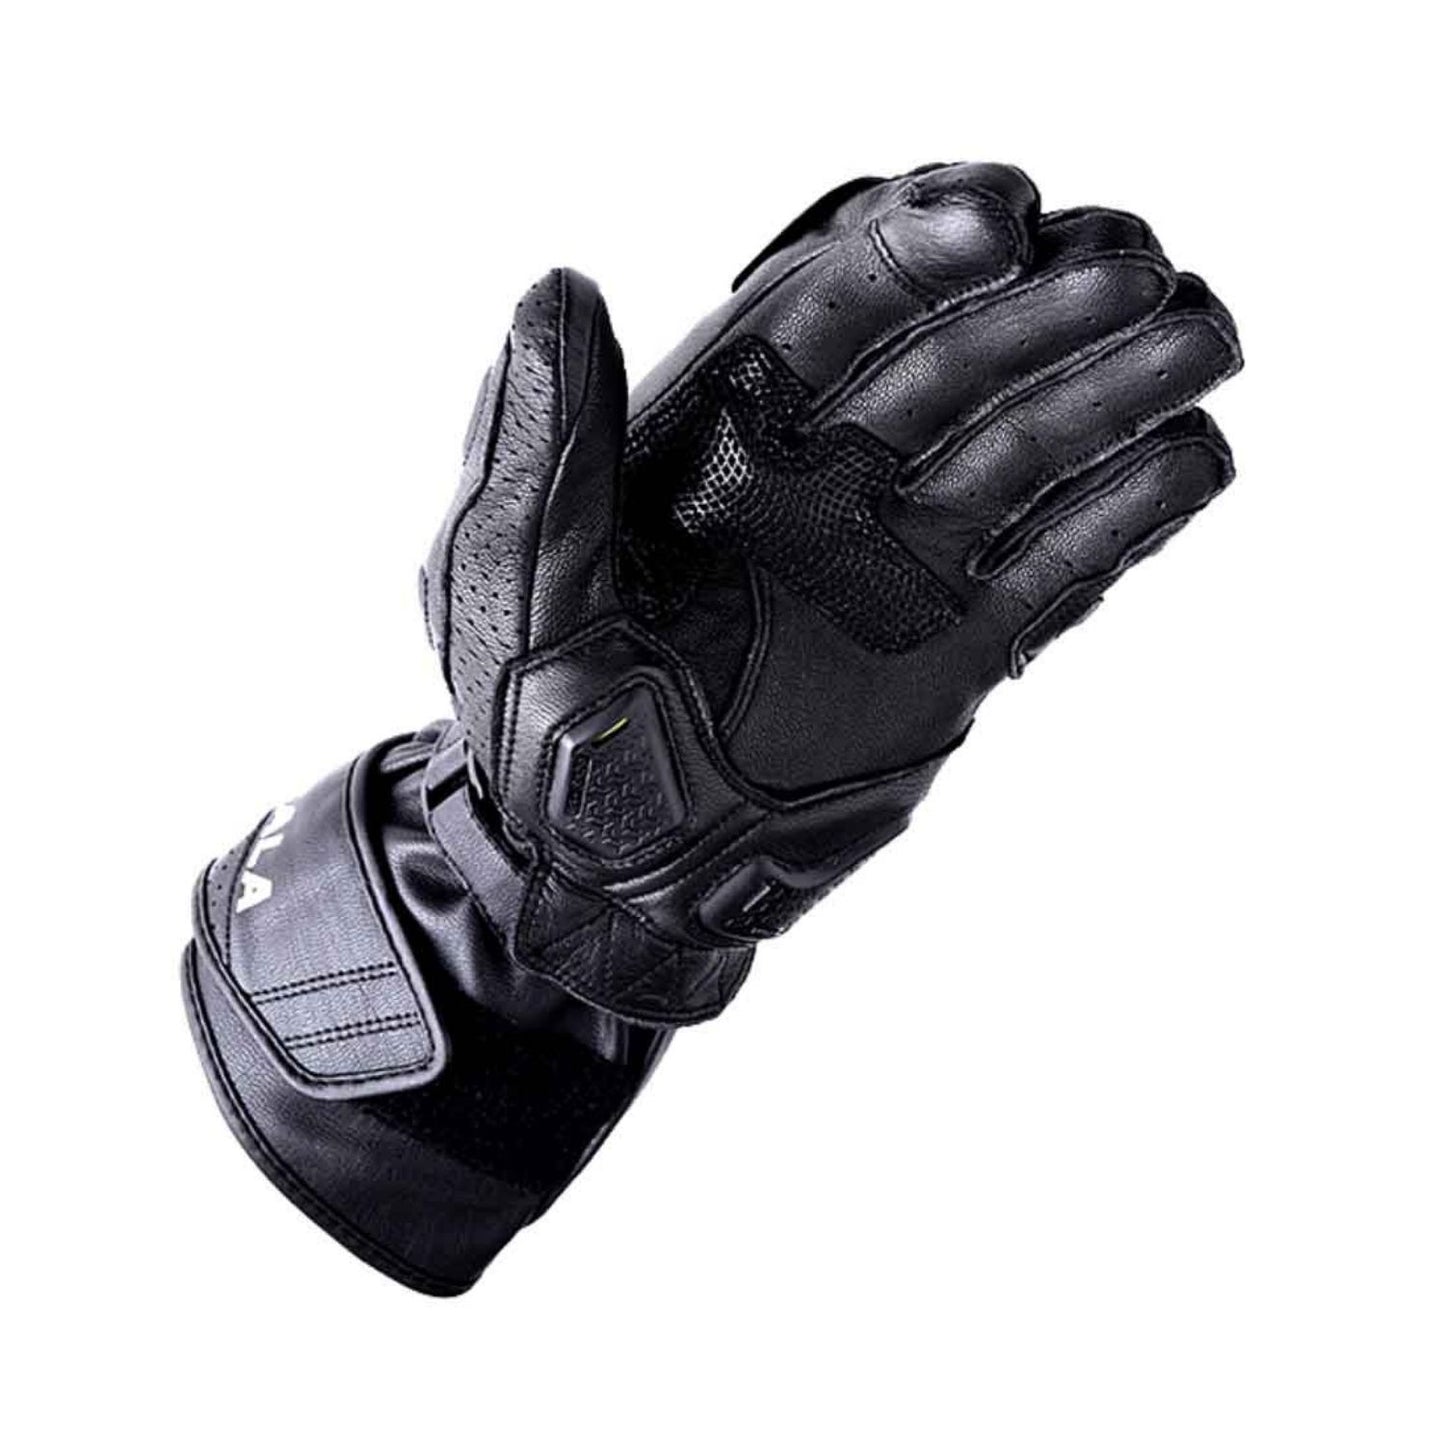 Scala Trekker Glove